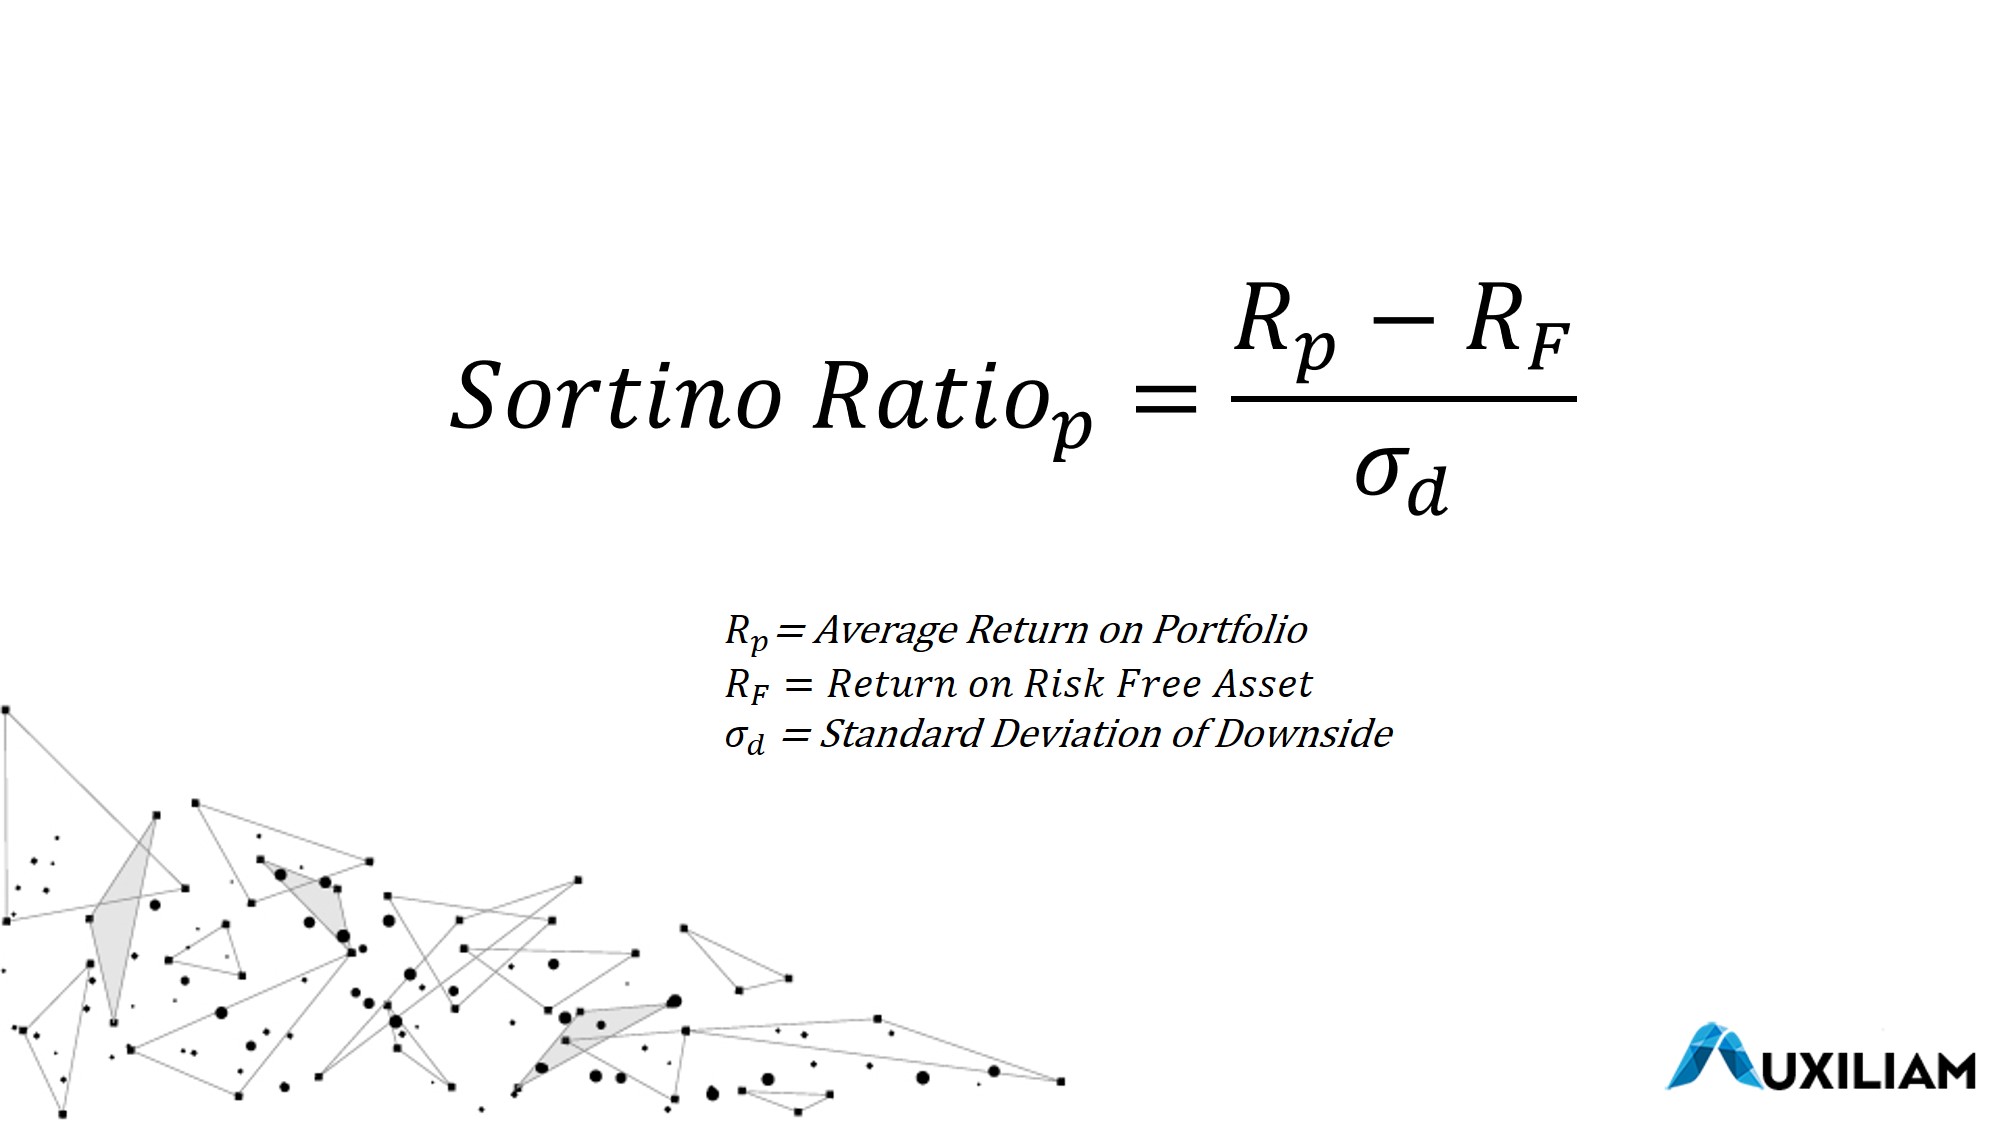 Formula for calculating the Sortino Ratio